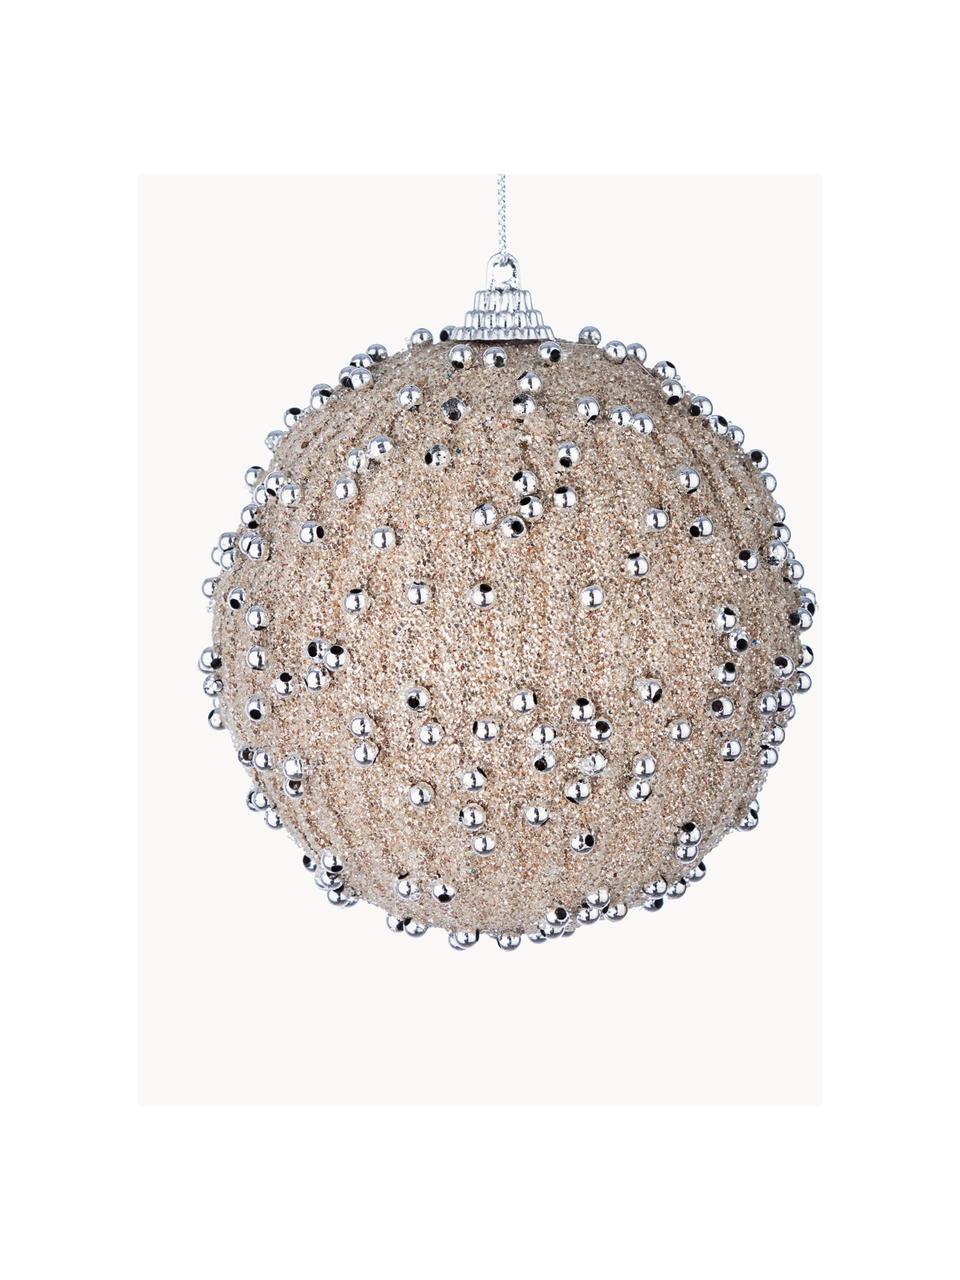 Kerstballen Pearly, 4 stuks, Polyschuim, Lichtbeige, glanzend, zilverkleurig, Ø 10 cm